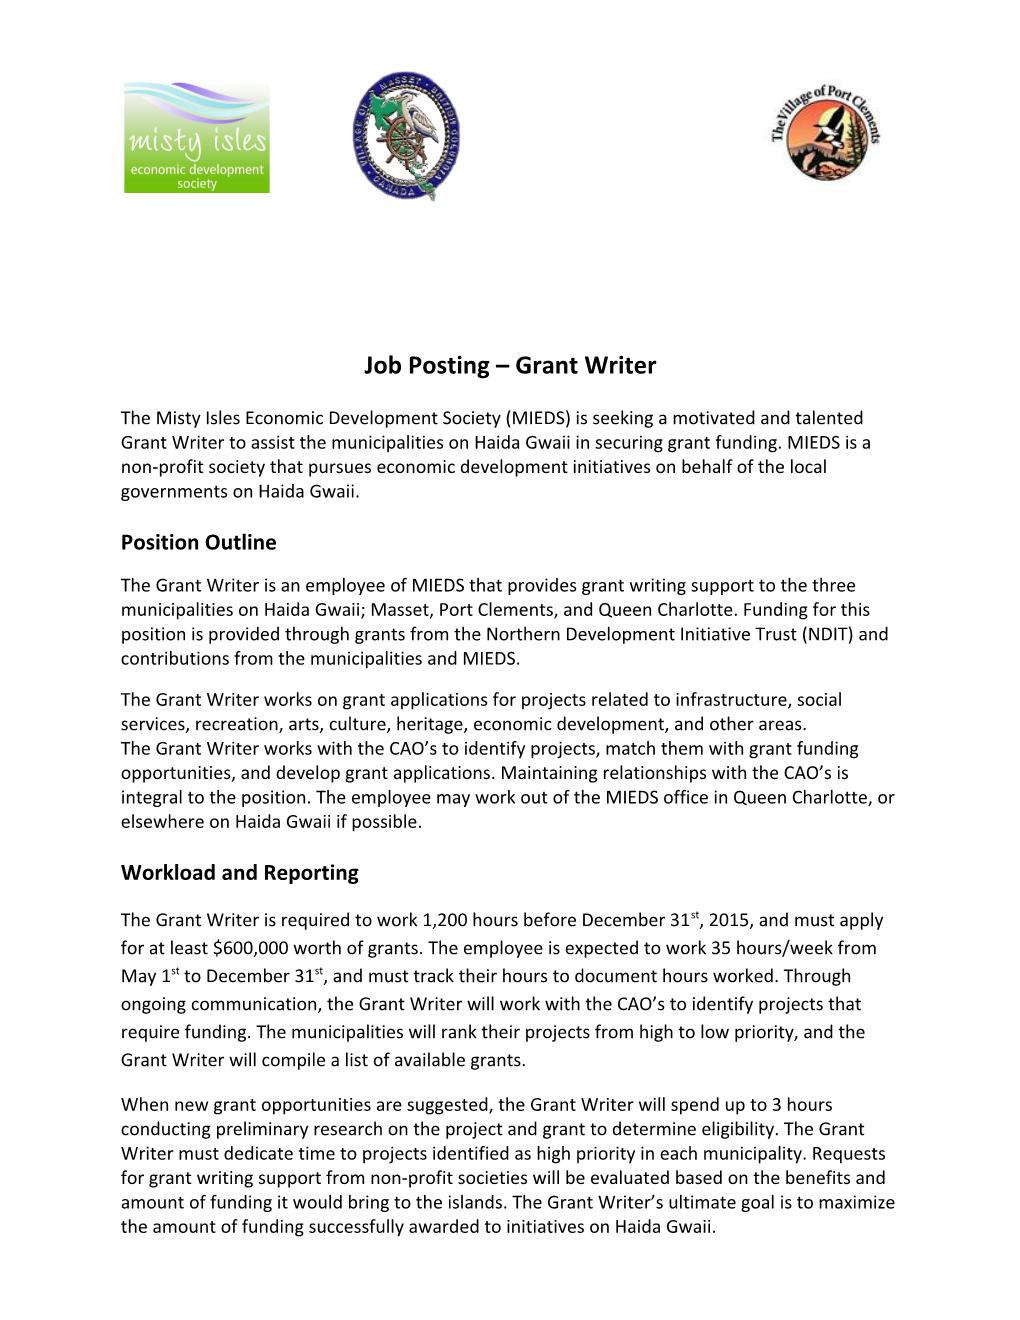 Job Posting Grant Writer